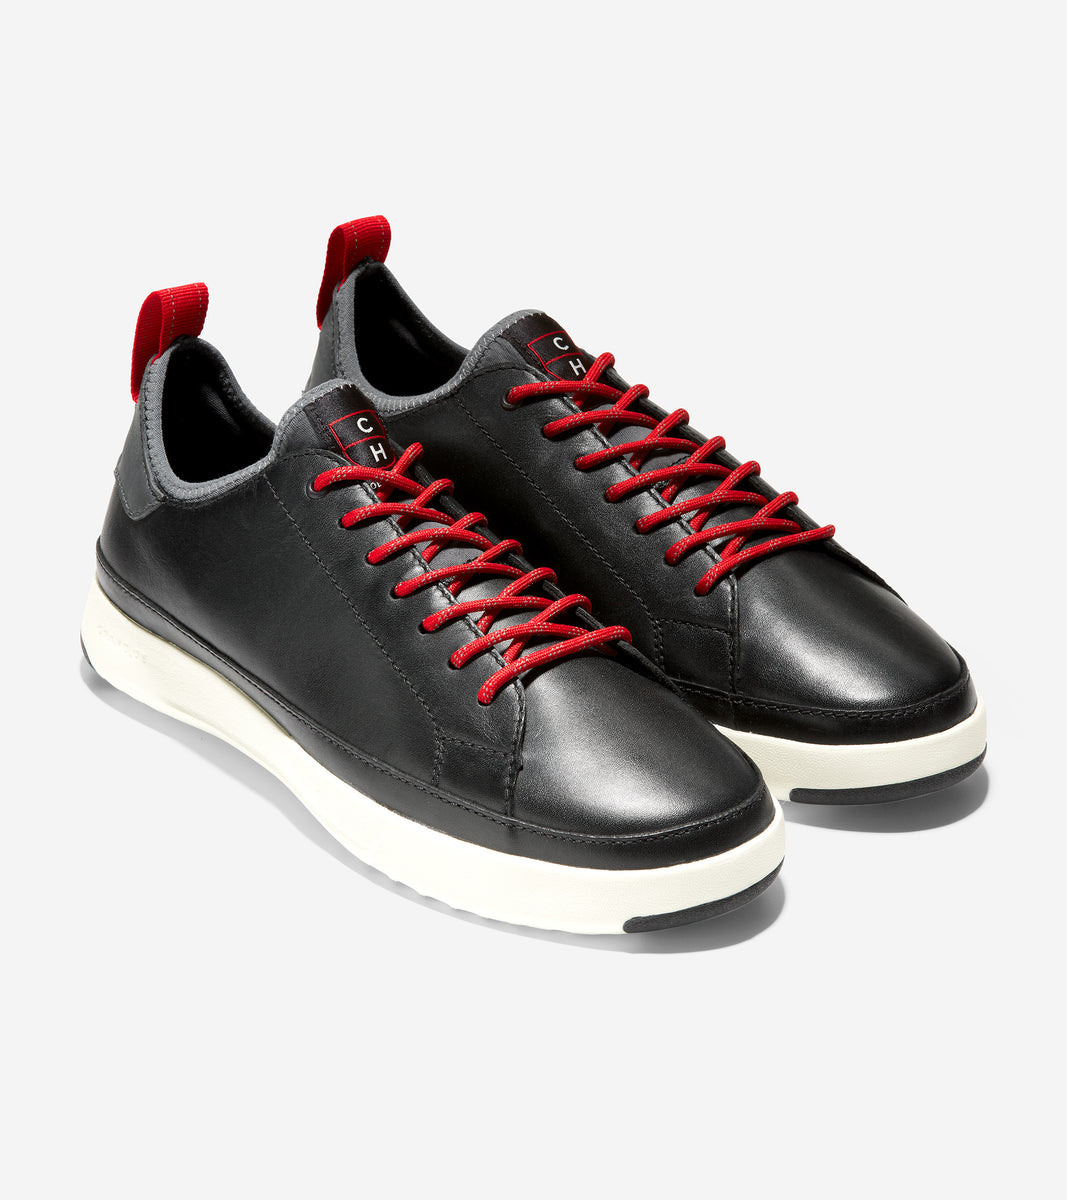 ColeHaan-GrandPrø Tennis Sneaker-c31719-Black-Red